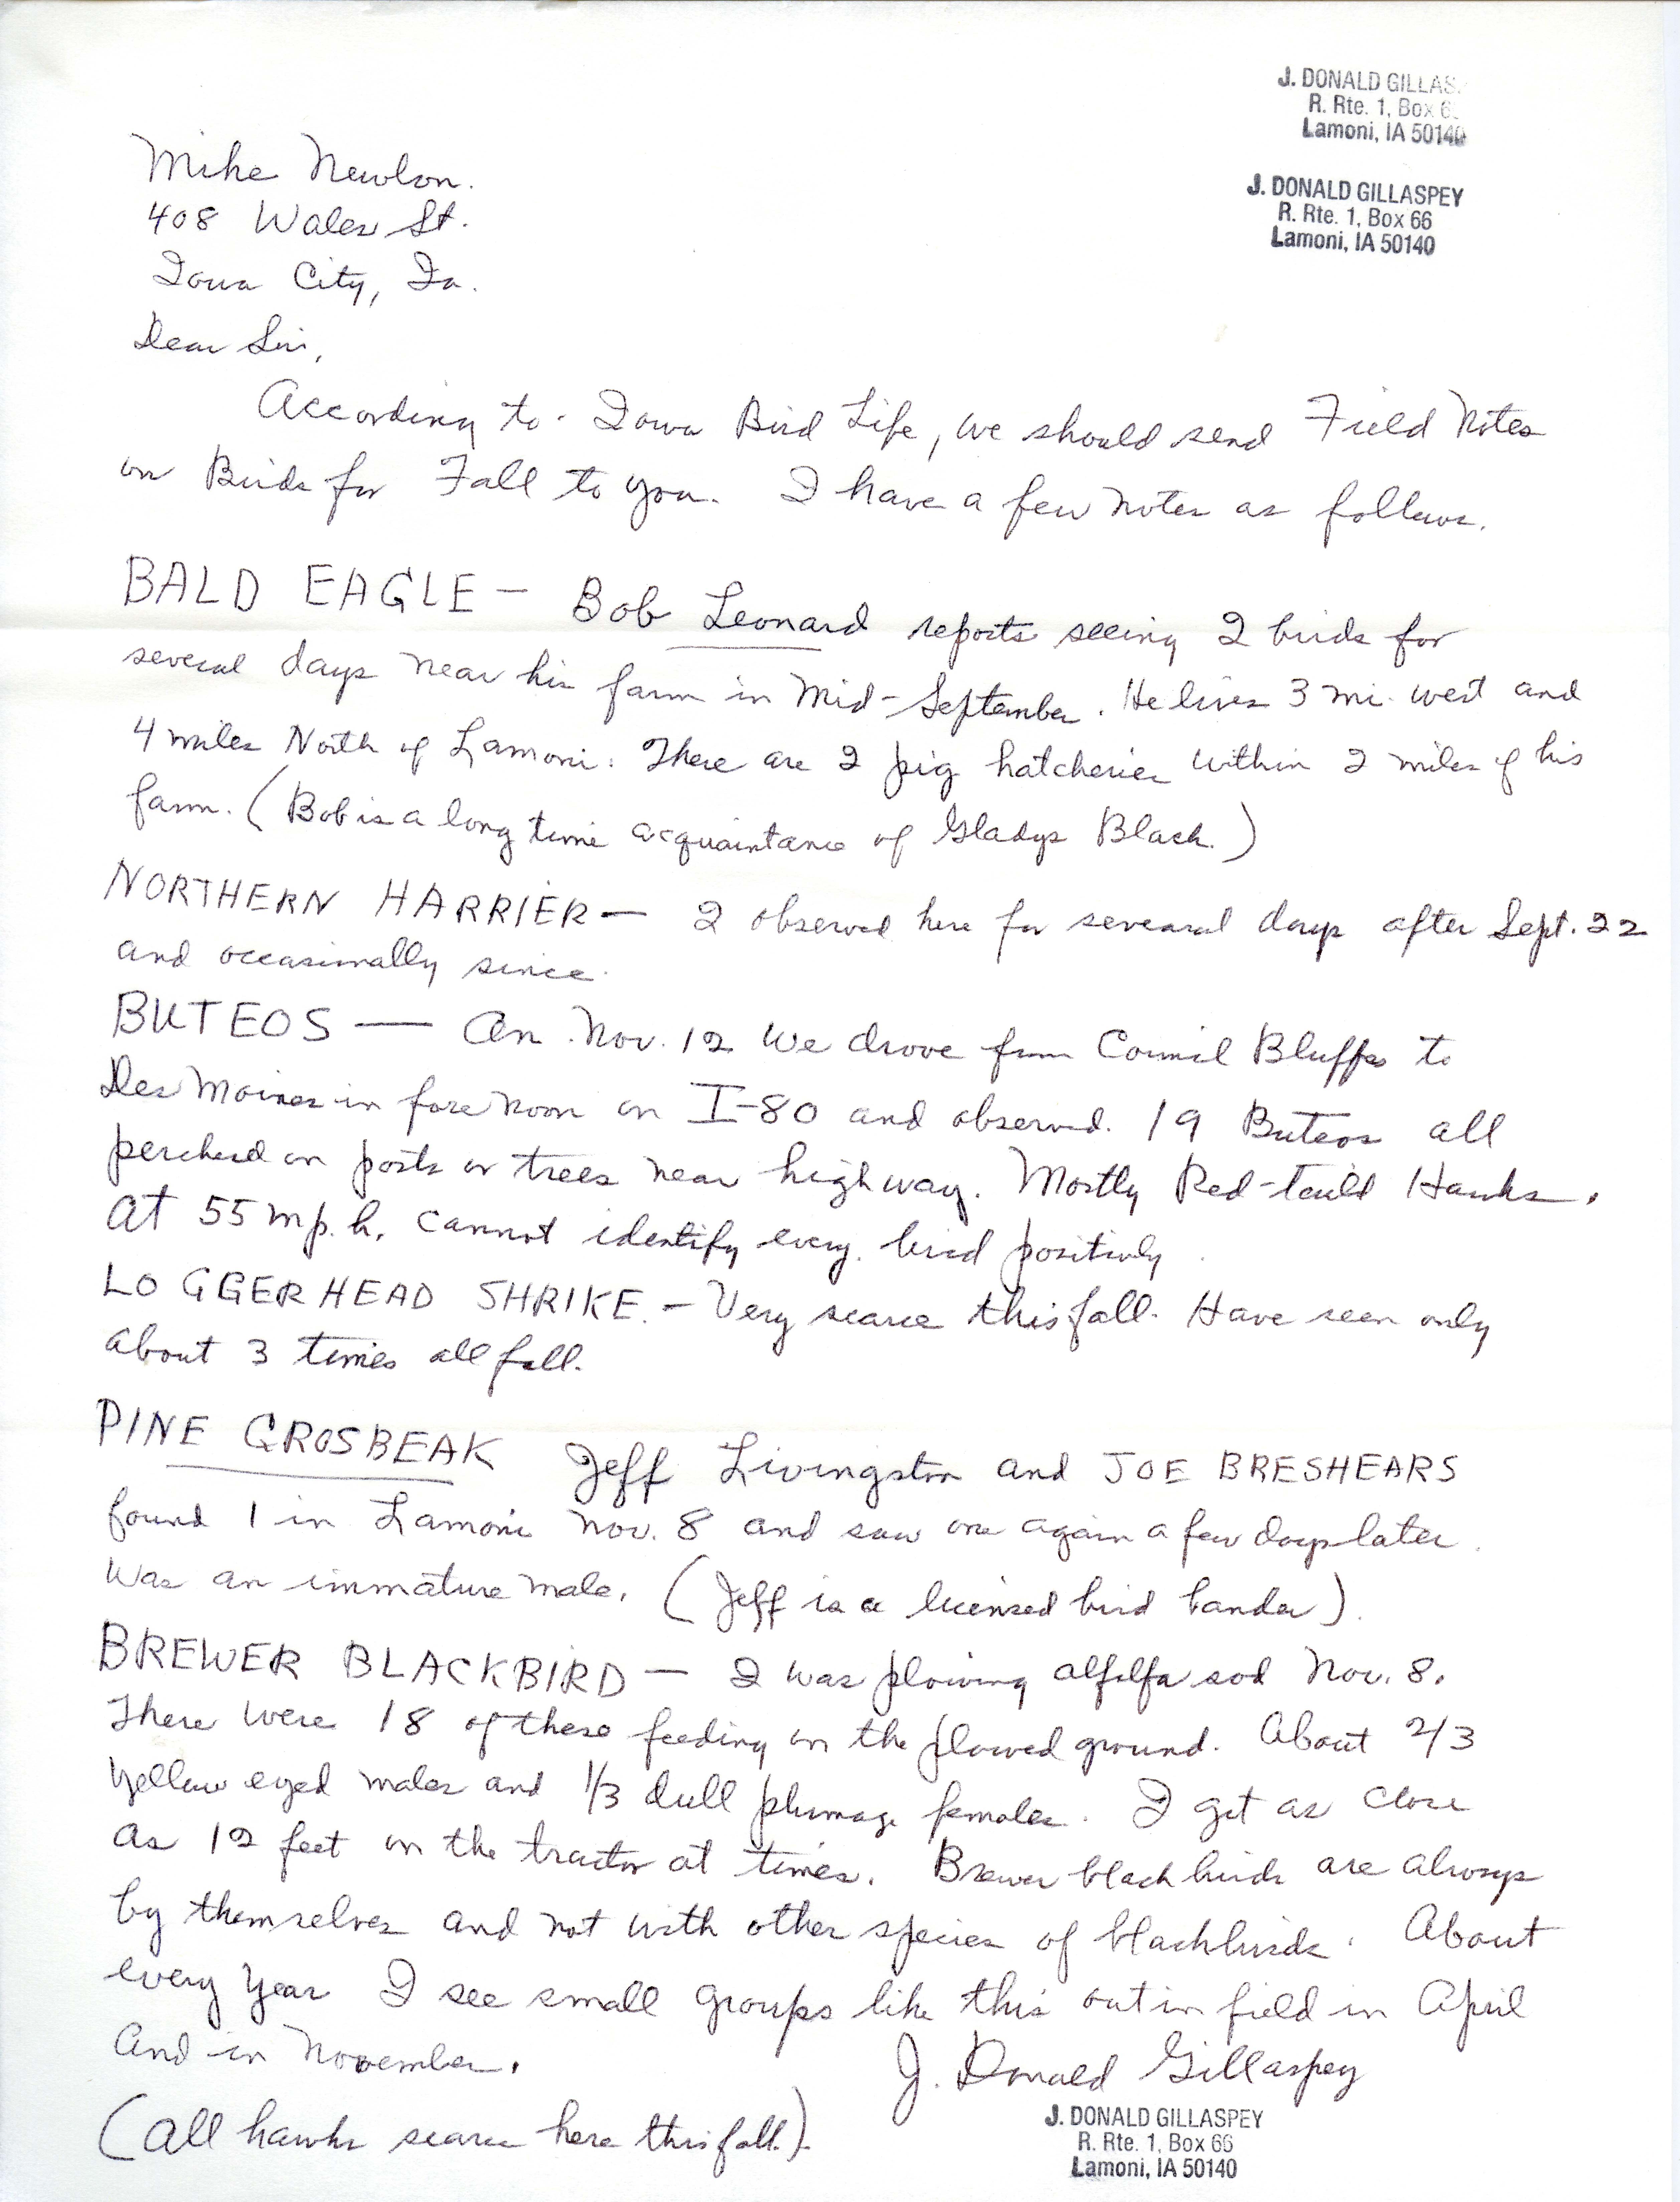 J. Donald Gillaspey letter to Michael C. Newlon regarding birds seen during fall 1984